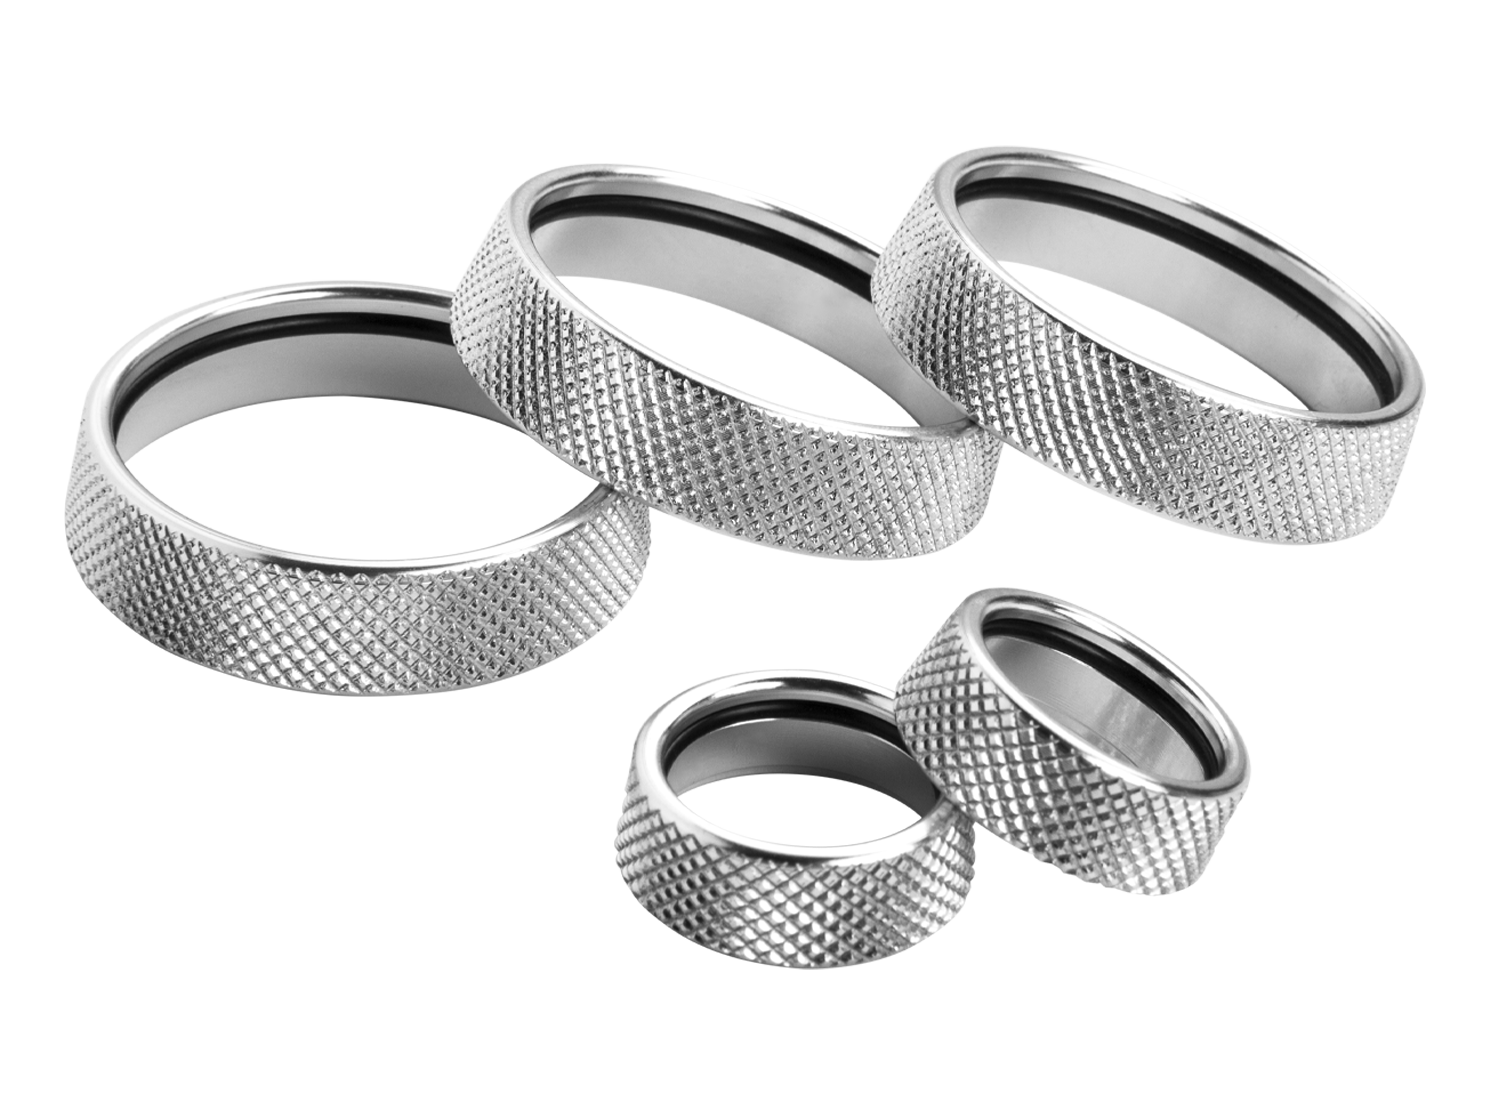 LEYO-Billet Aluminum Knobs